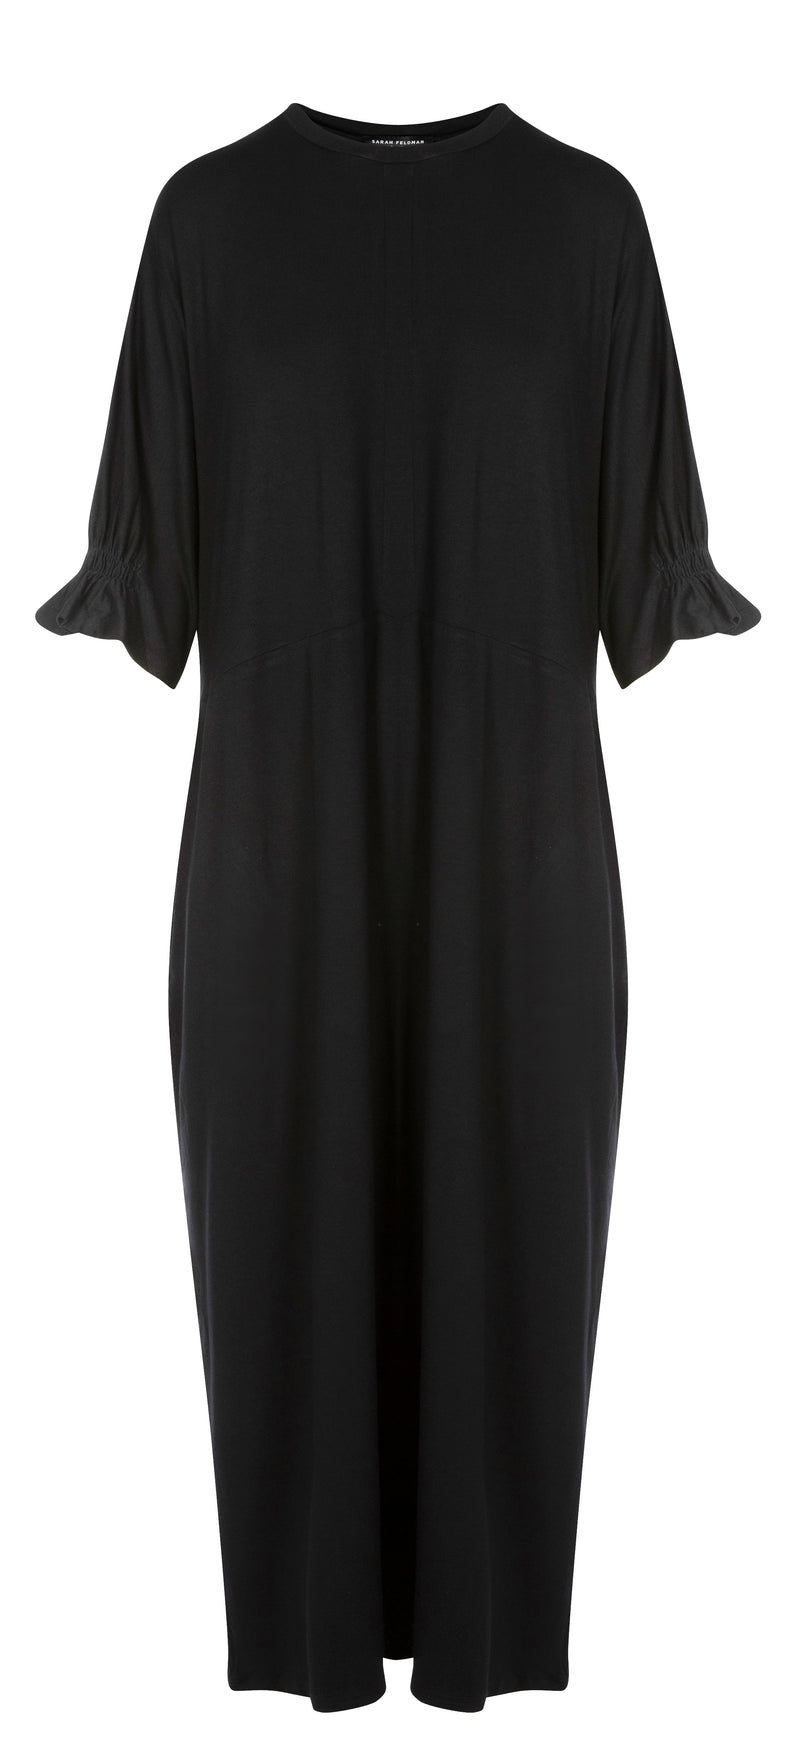 One-size Maxi Black Dress